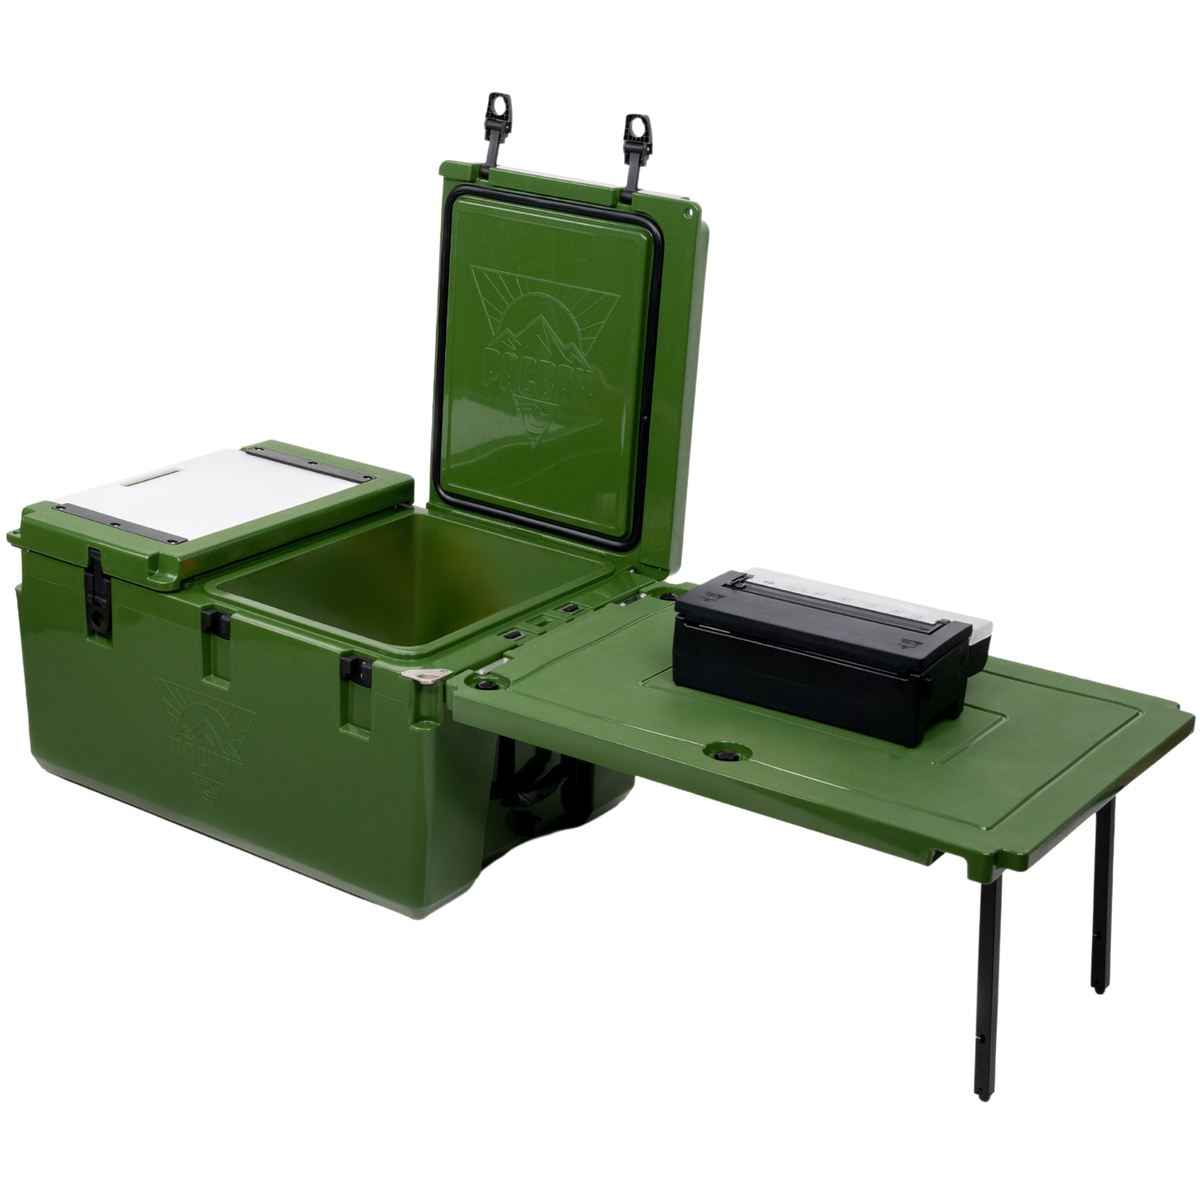 PacBak P88-MK Cooler & Roam 18-V Vacuum Sealer Combo - Army Green